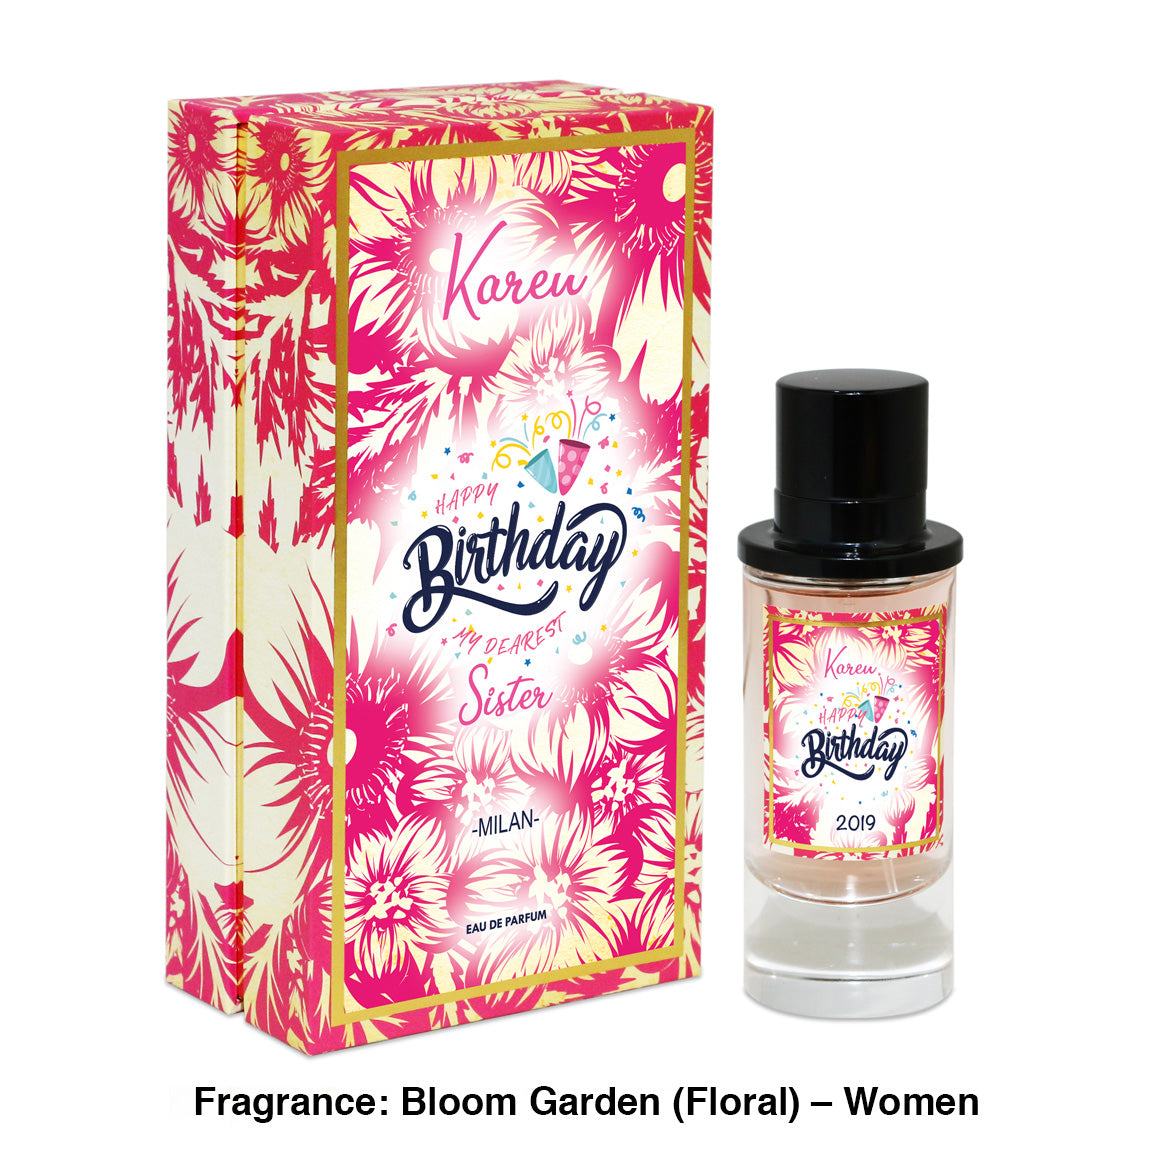 Customized Perfume Gift - Luxury Fragrance - For Wedding - Birthday - Valentine - Corporate Events - samawa perfumes 